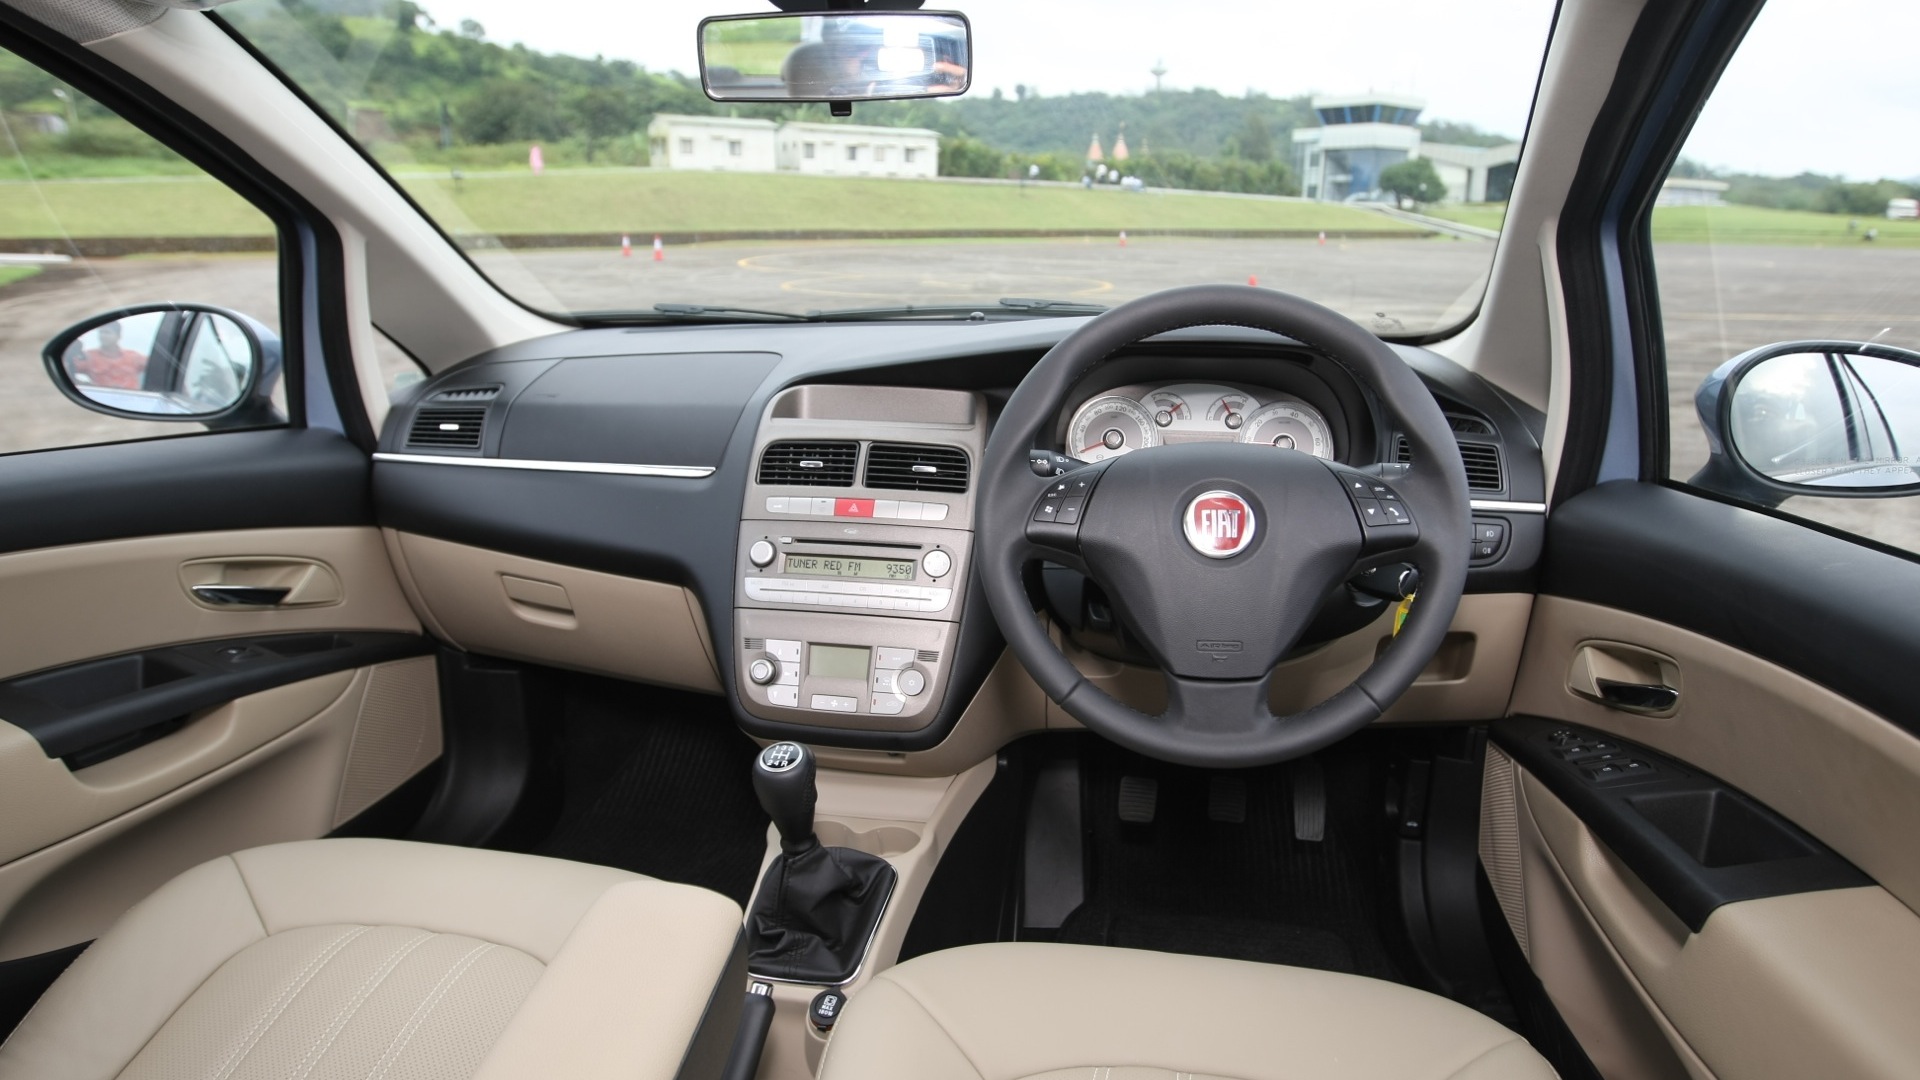 Fiat-Linea-2012-Multijet-Active-Interior